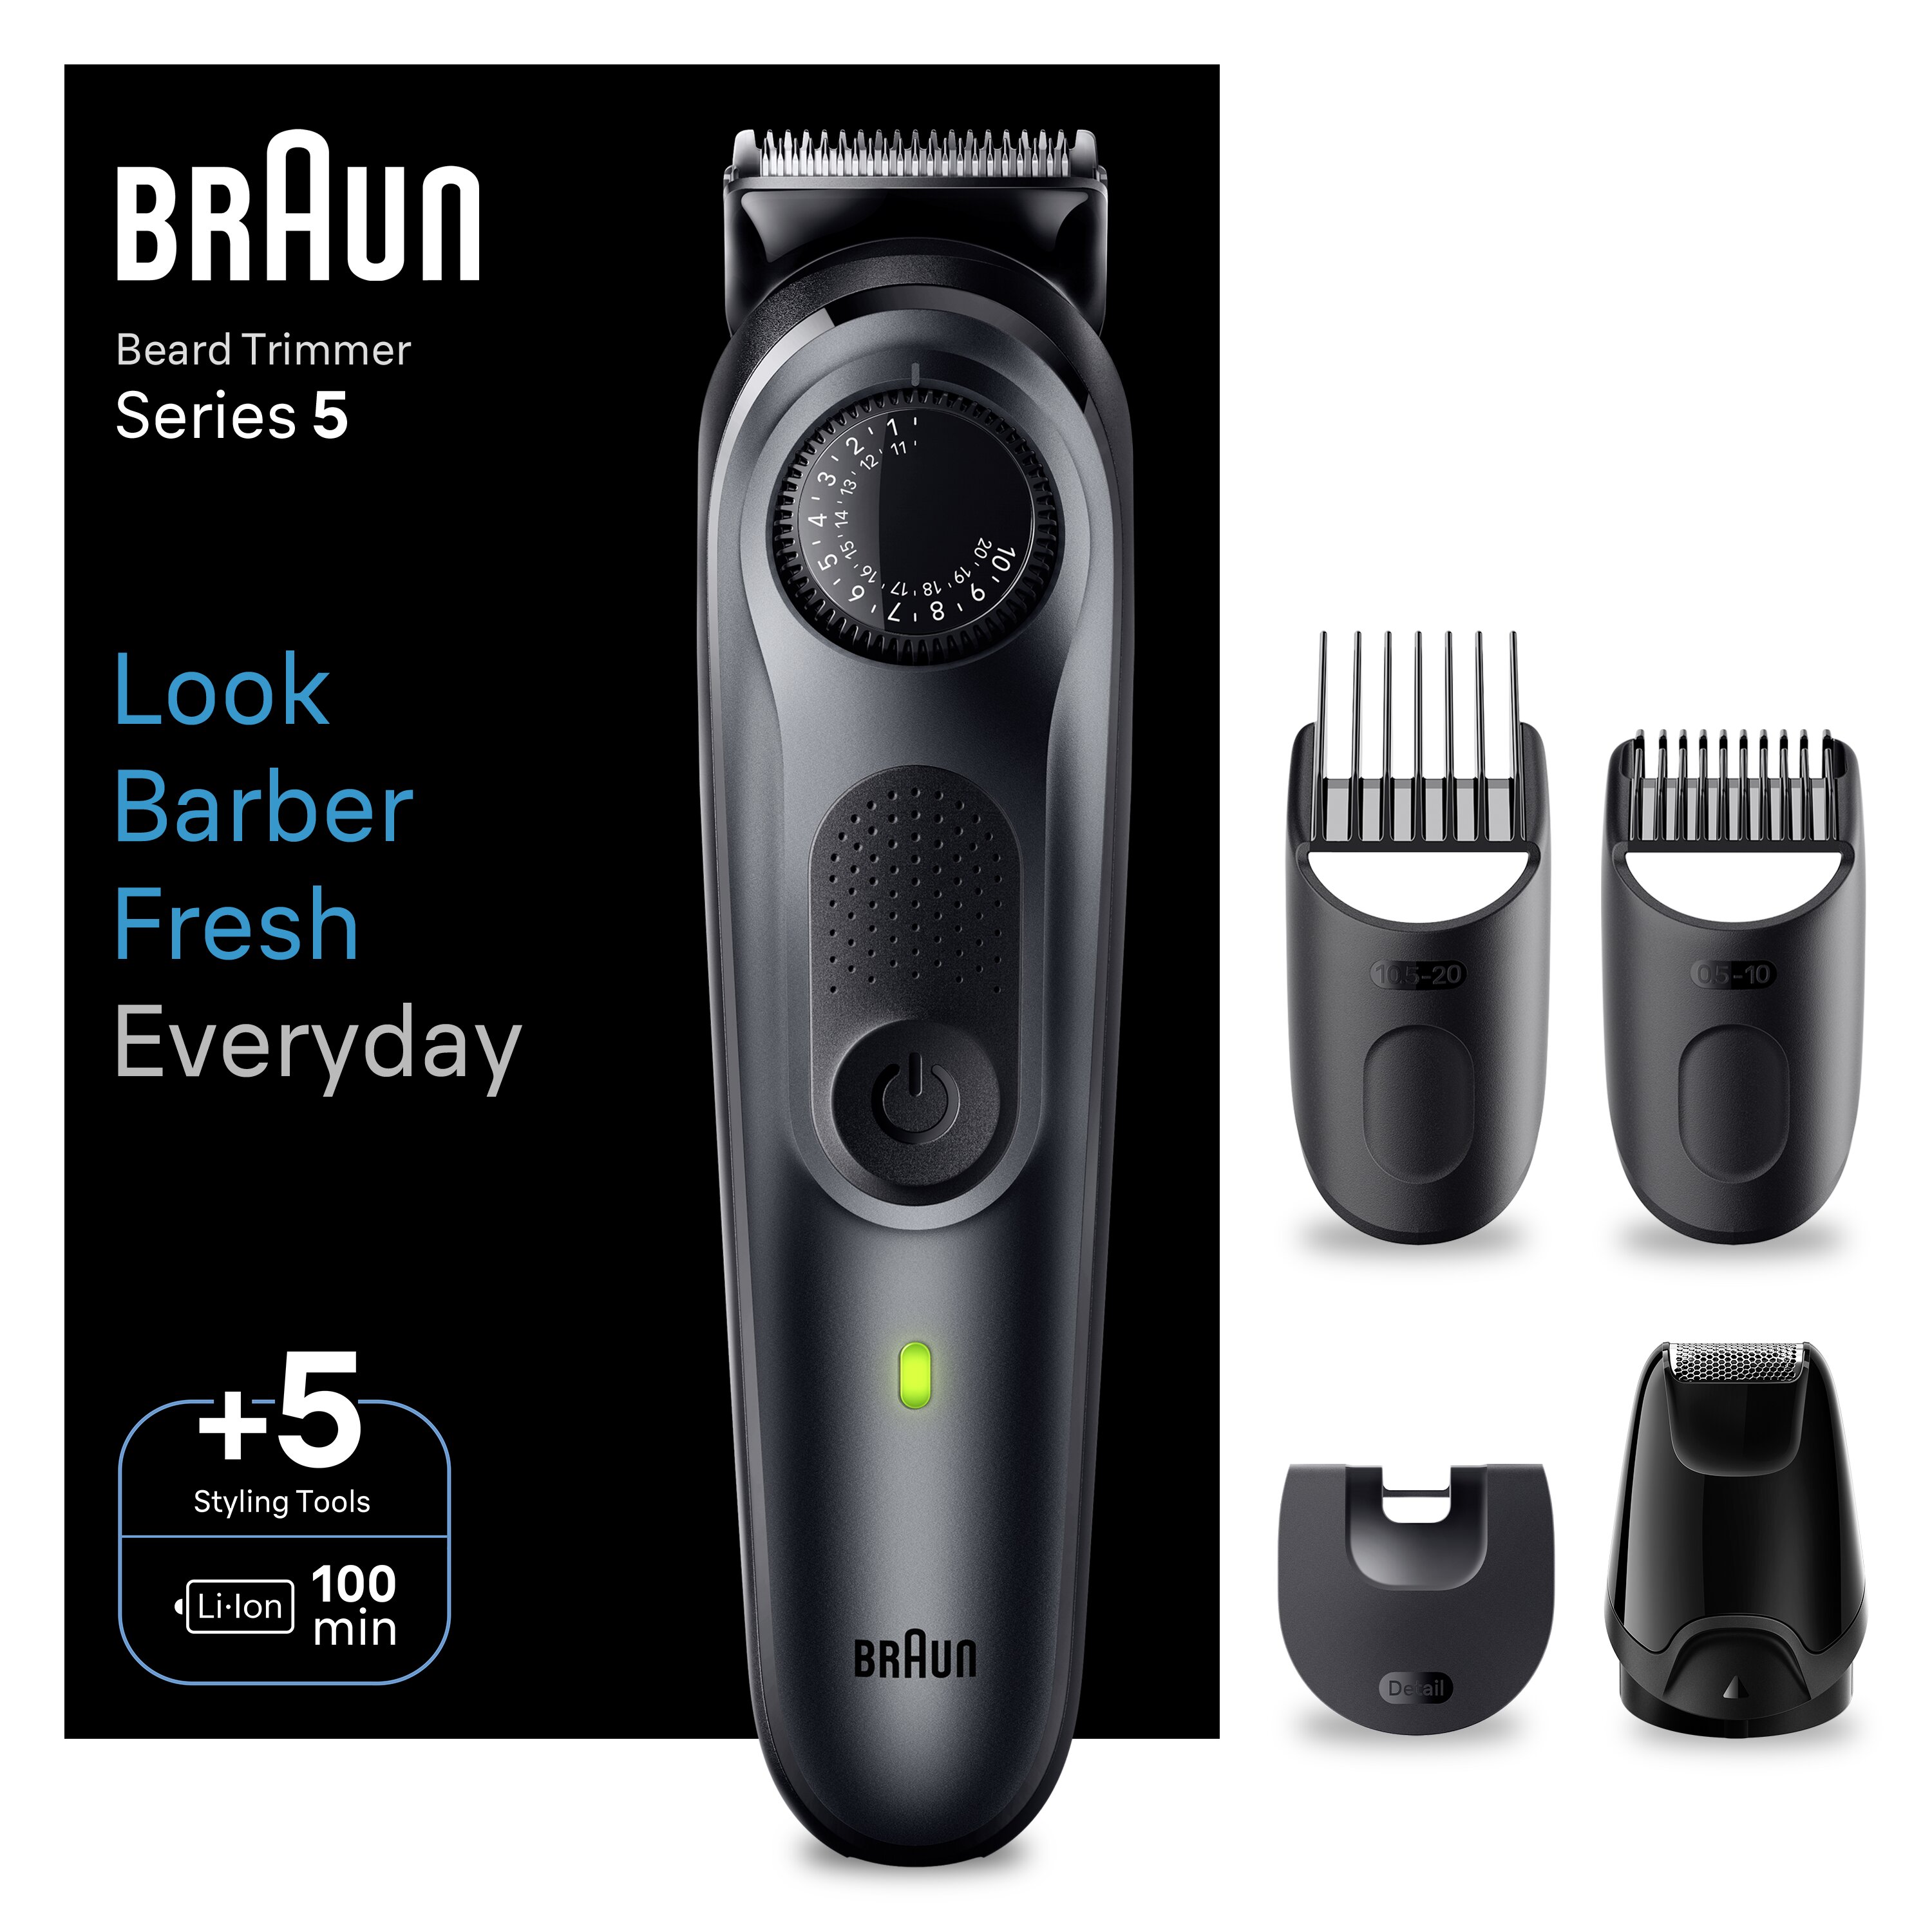 Braun - Braun Series 5 BT5420 recortadora de barba con lámina ultraafilada, 40 ajustes de longitud, funda, accesorios para conseguir tu estilo, estuche, recargable